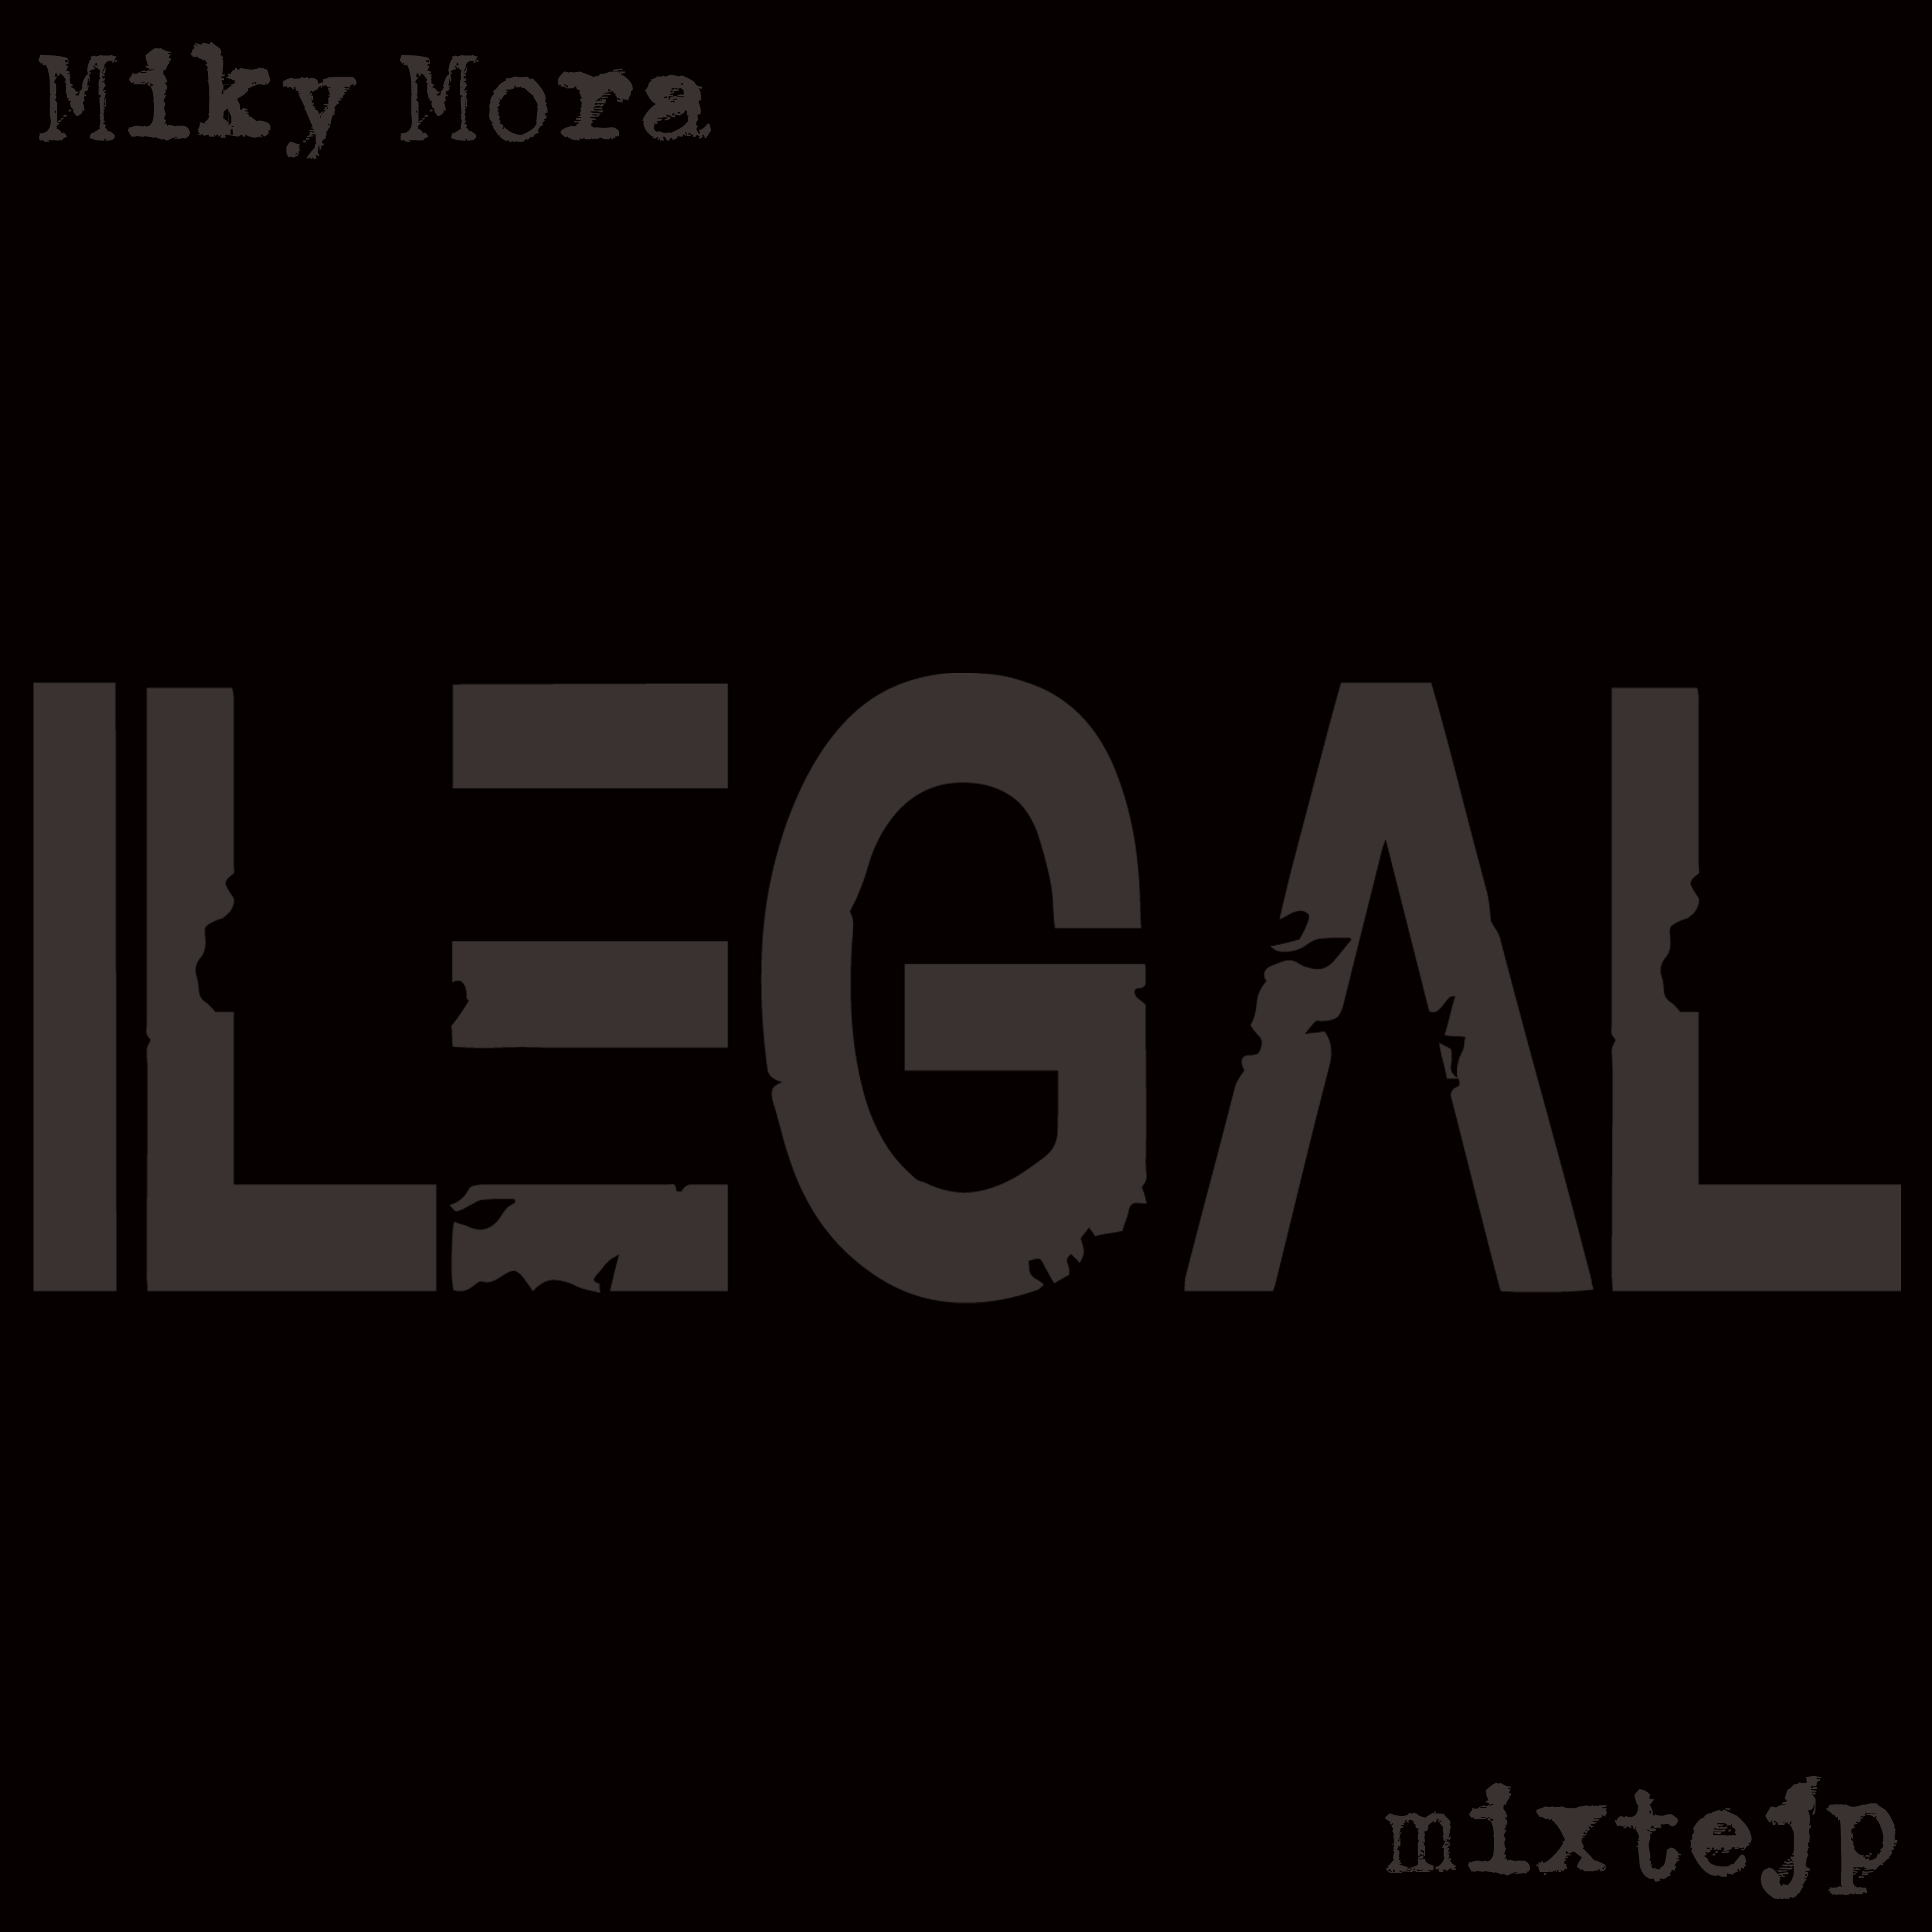 Miky Mora, Ilegal Mixtejp, CD